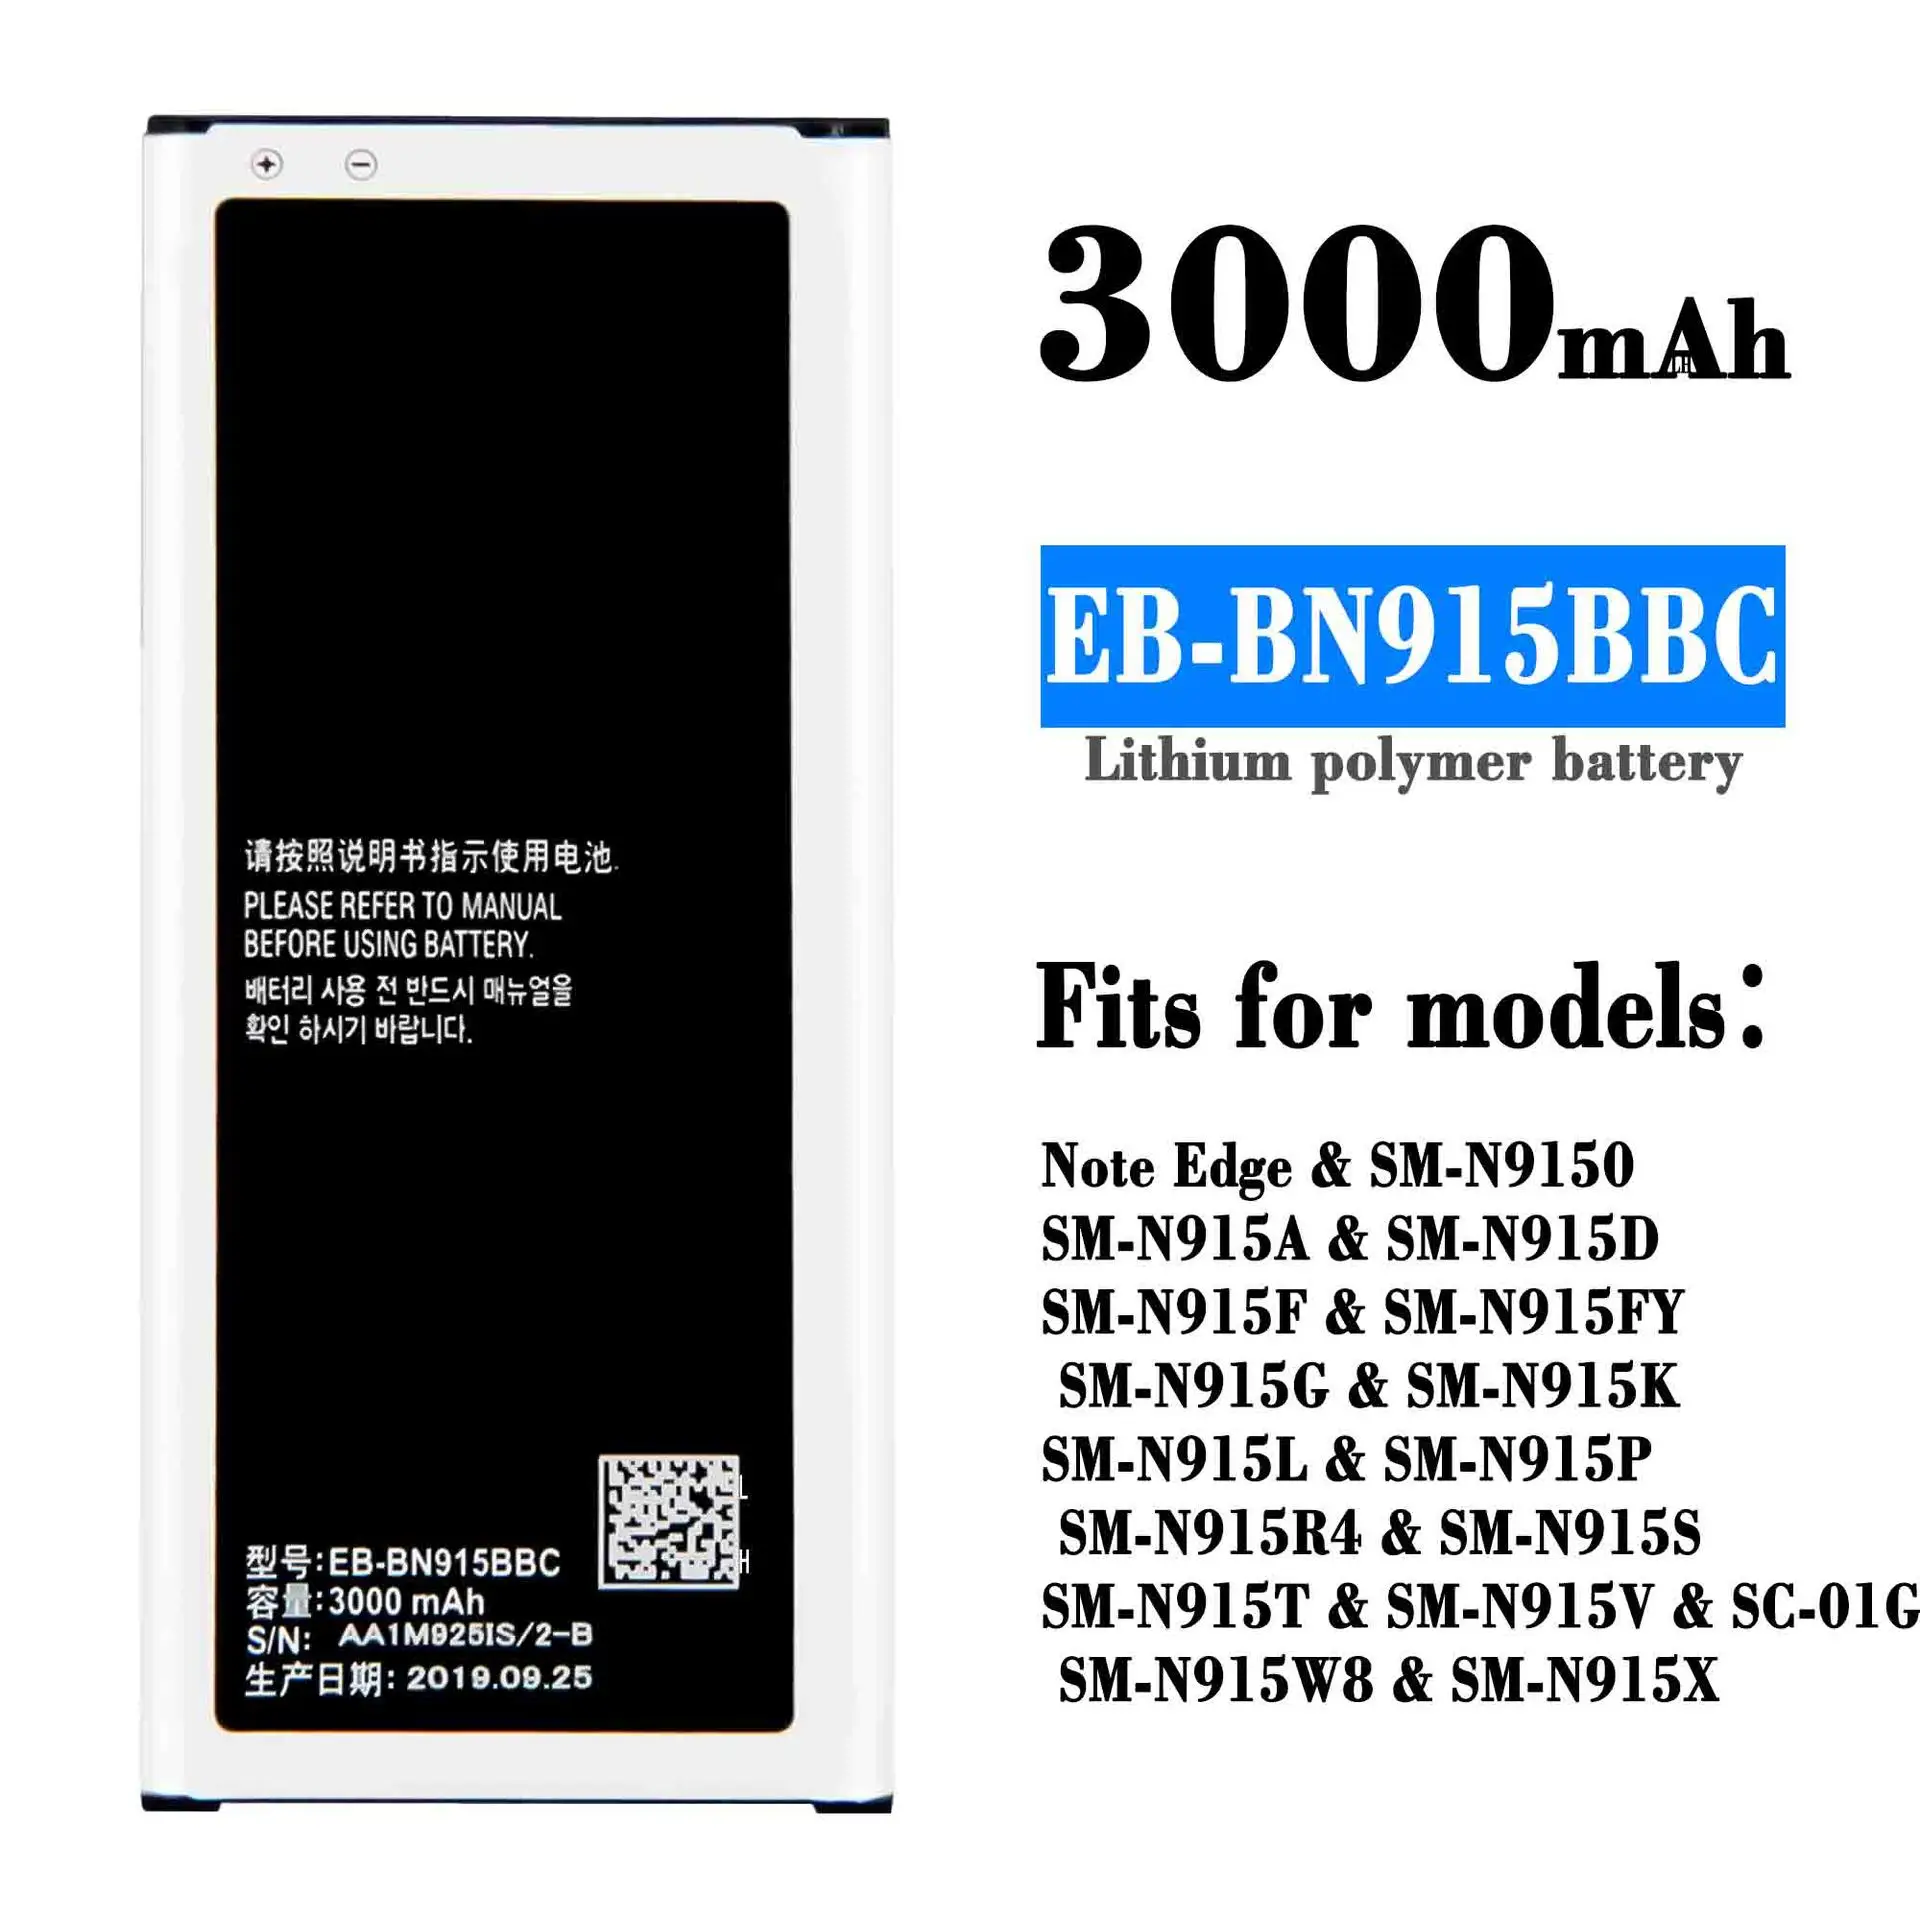 

Для SAMSUNG оригинальная Φ 3000 мАч аккумулятор Galaxy Note Edge N9150 N915 N915F/D/A/T/W8 N915K/L/SN915V/G/X EB-BN915BBC